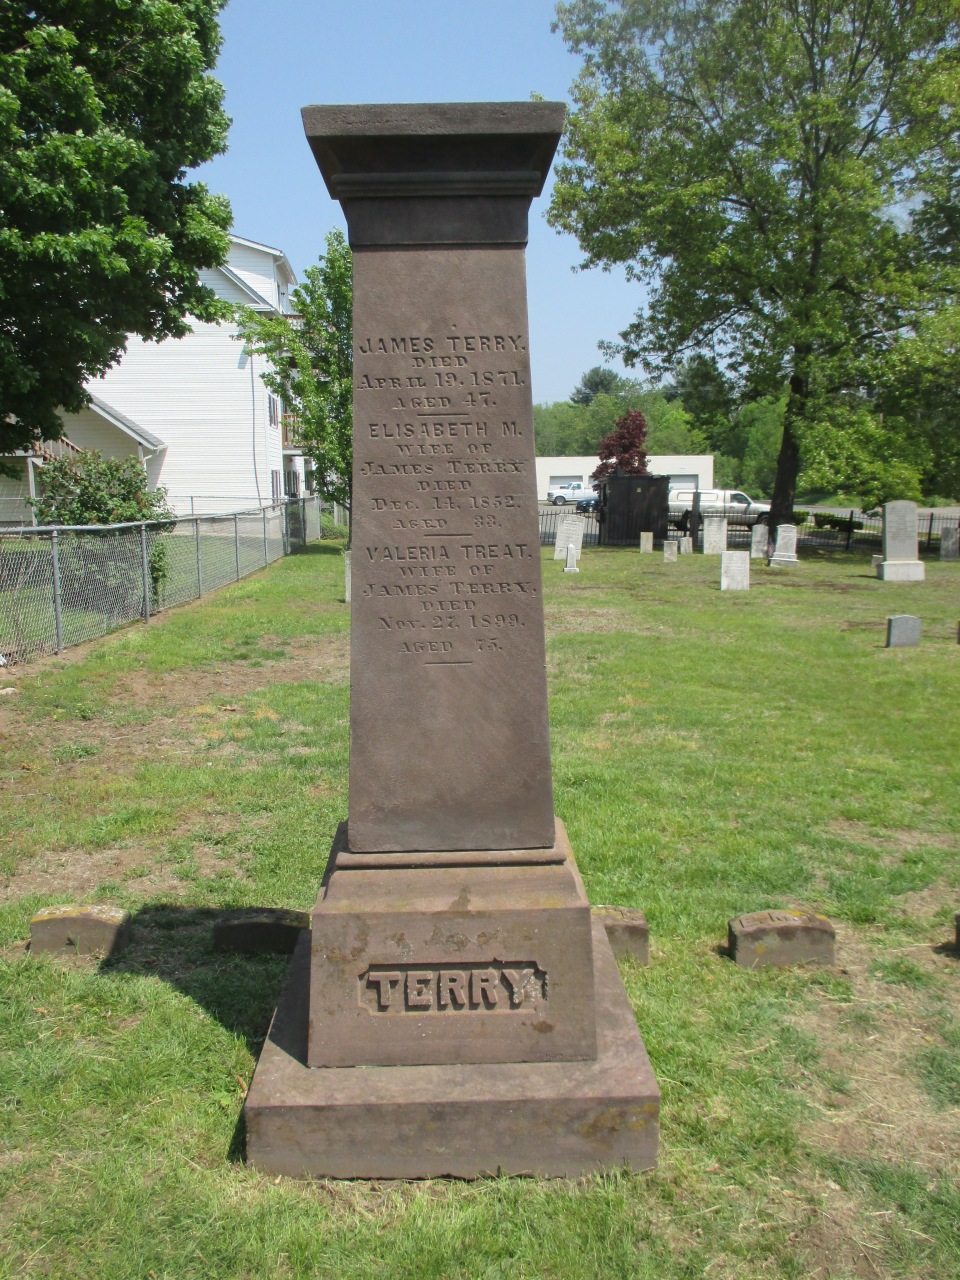 James Terry gravestone front restored